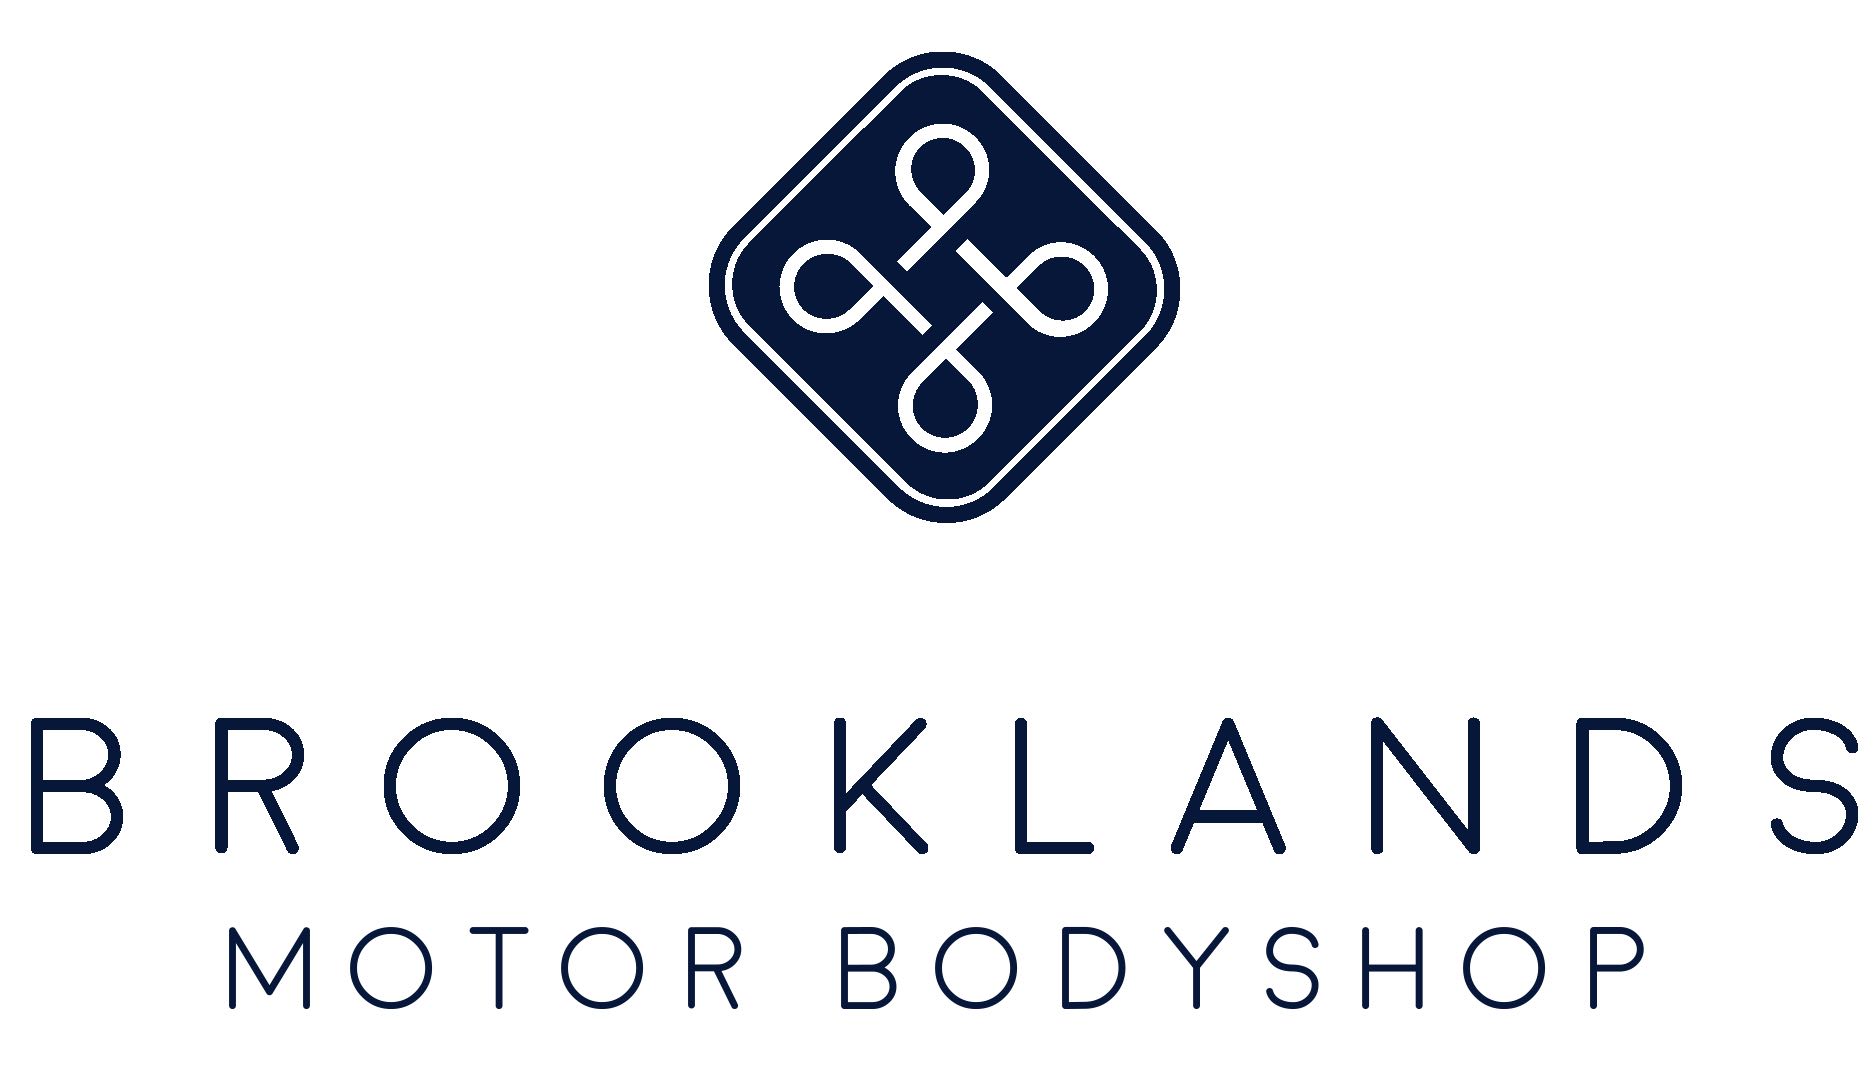 Brooklands Motor Body Shop logo